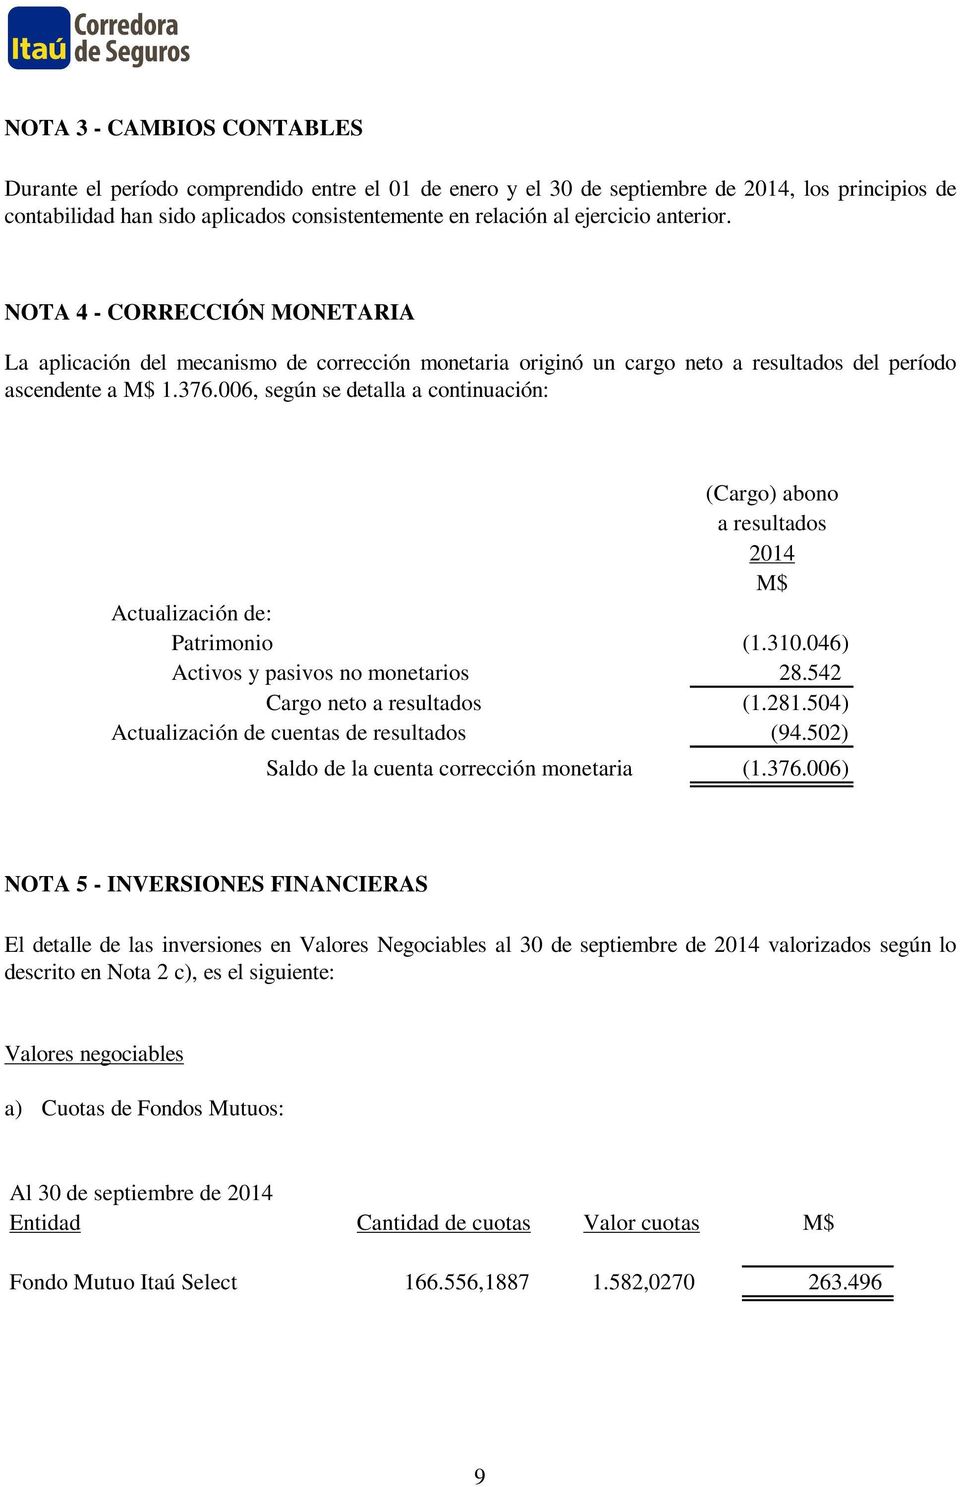 006, según se detalla a continuación: (Cargo) abono a resultados 2014 M$ Actualización de: Patrimonio (1.310.046) Activos y pasivos no monetarios 28.542 Cargo neto a resultados (1.281.